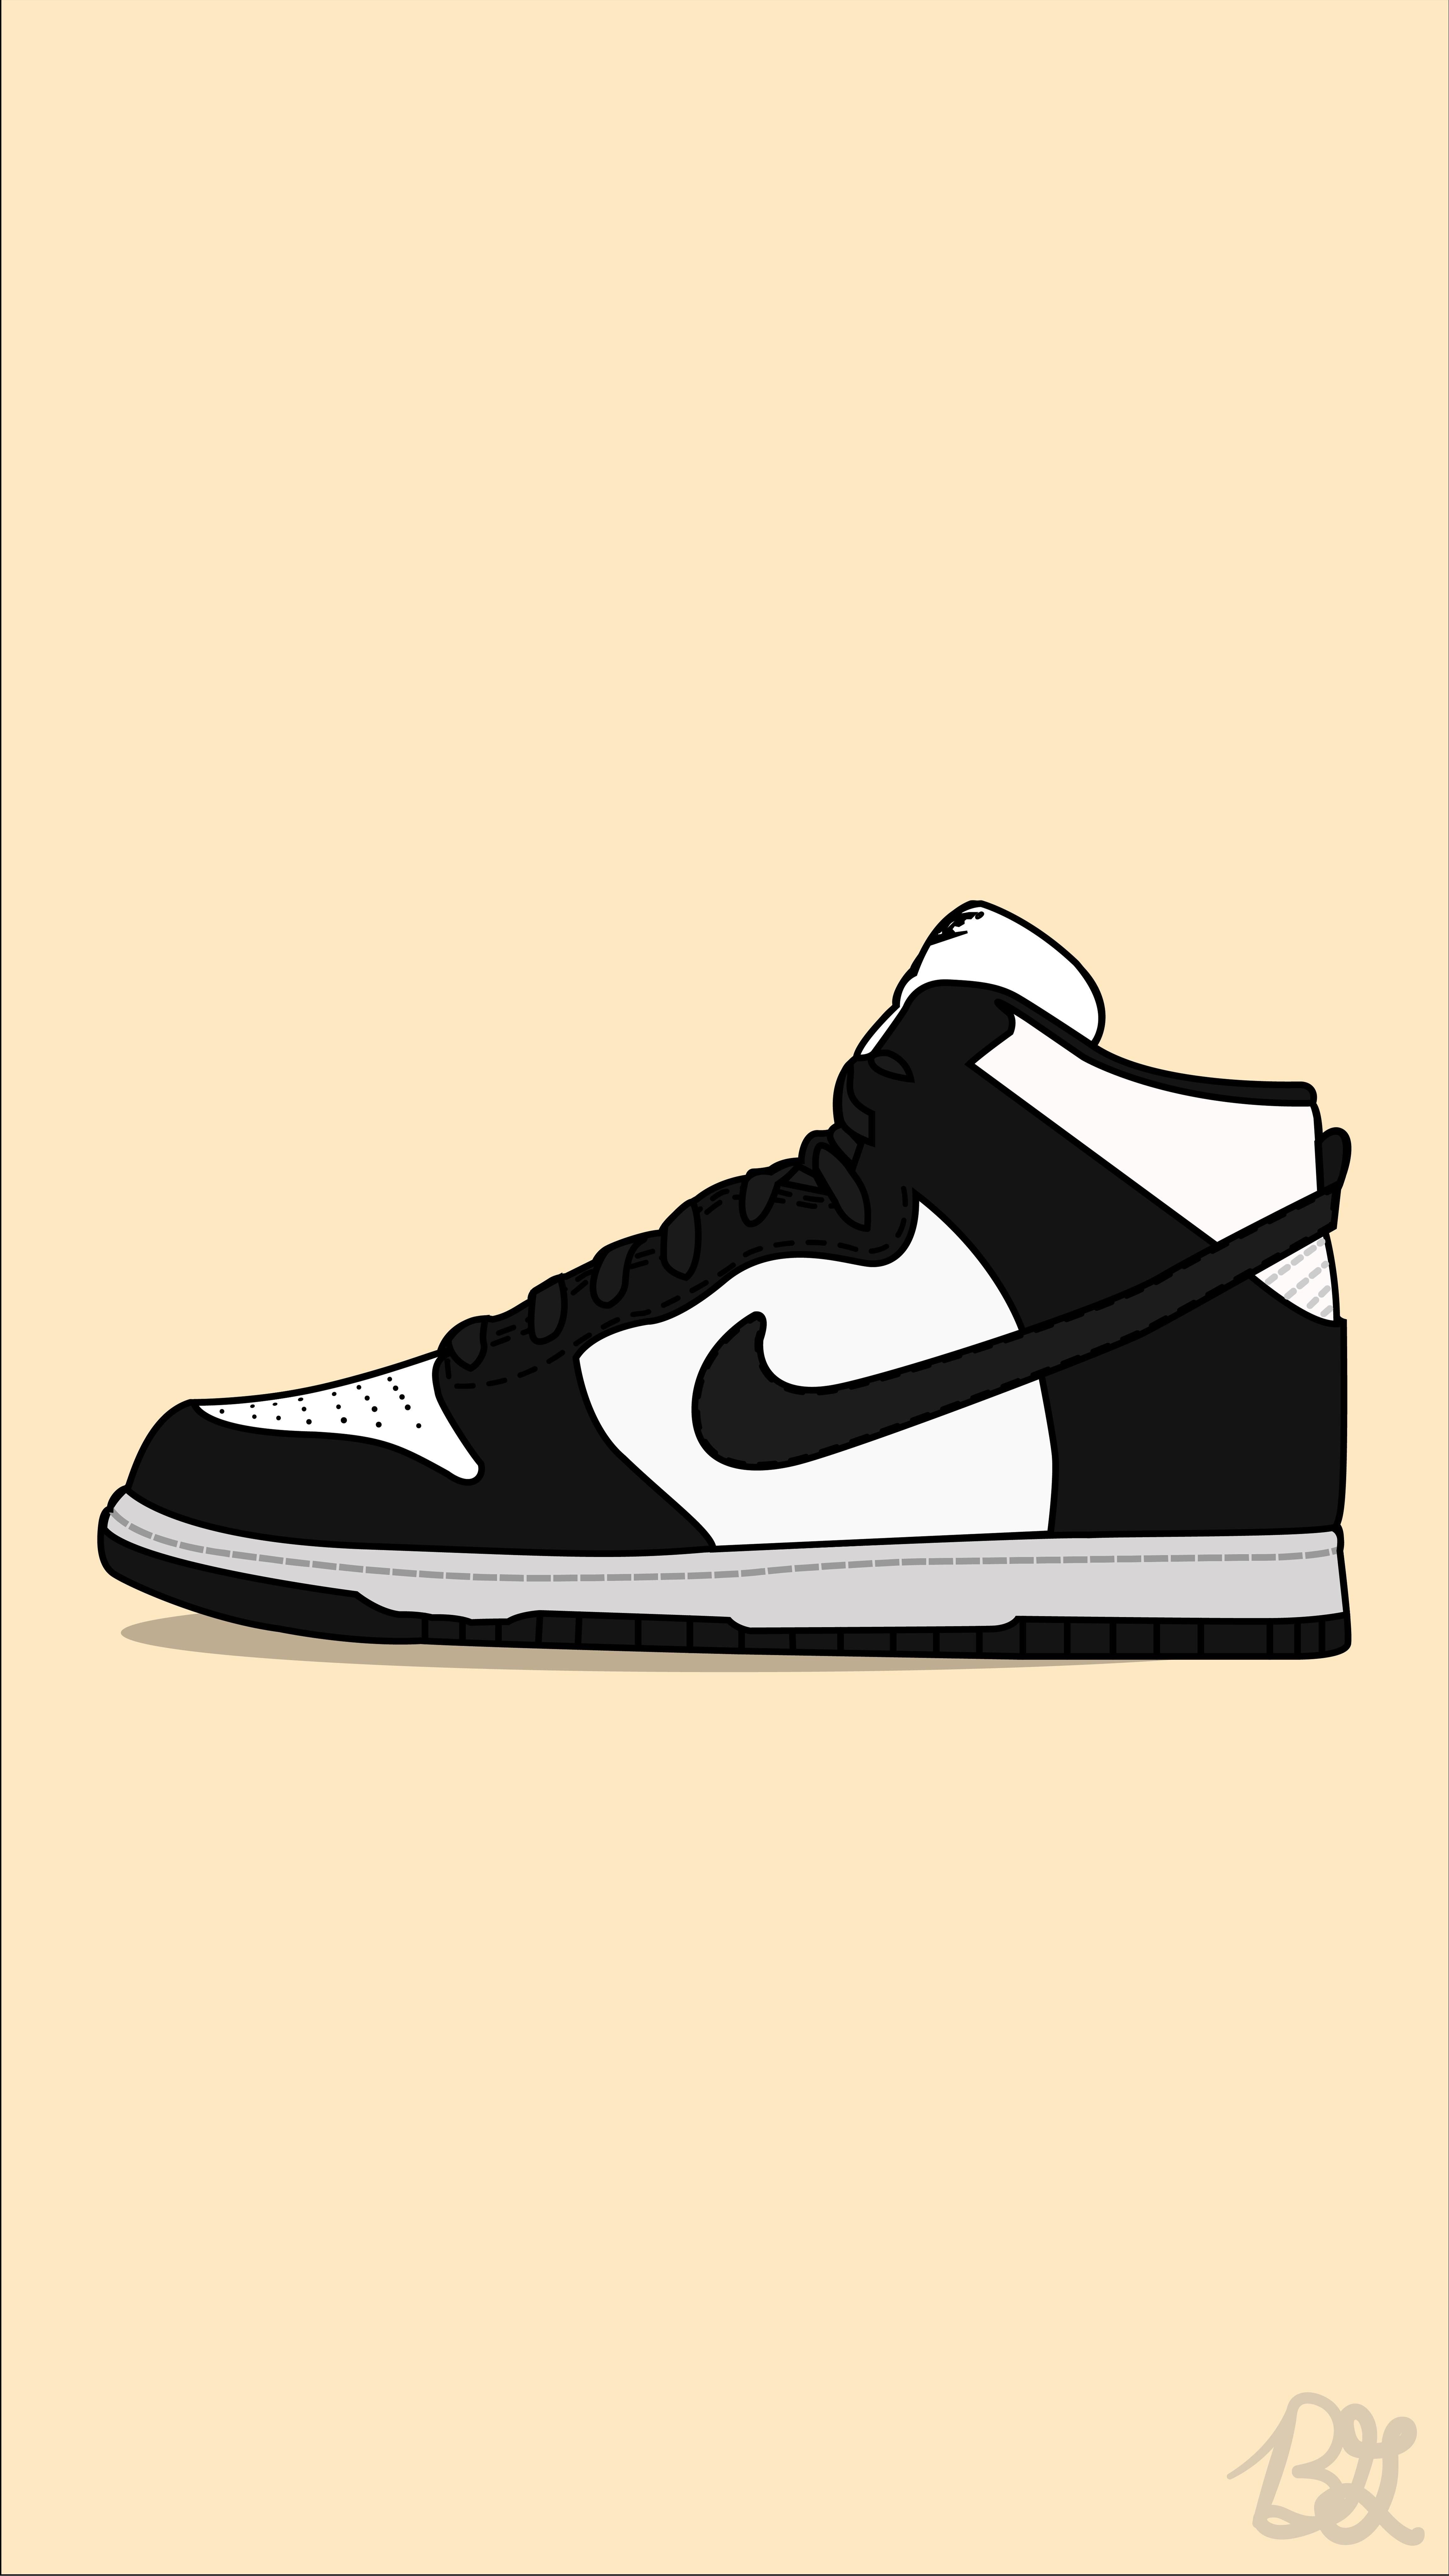 1080p Phone Wallpaper Of Nike Dunk Shoes Sneakers